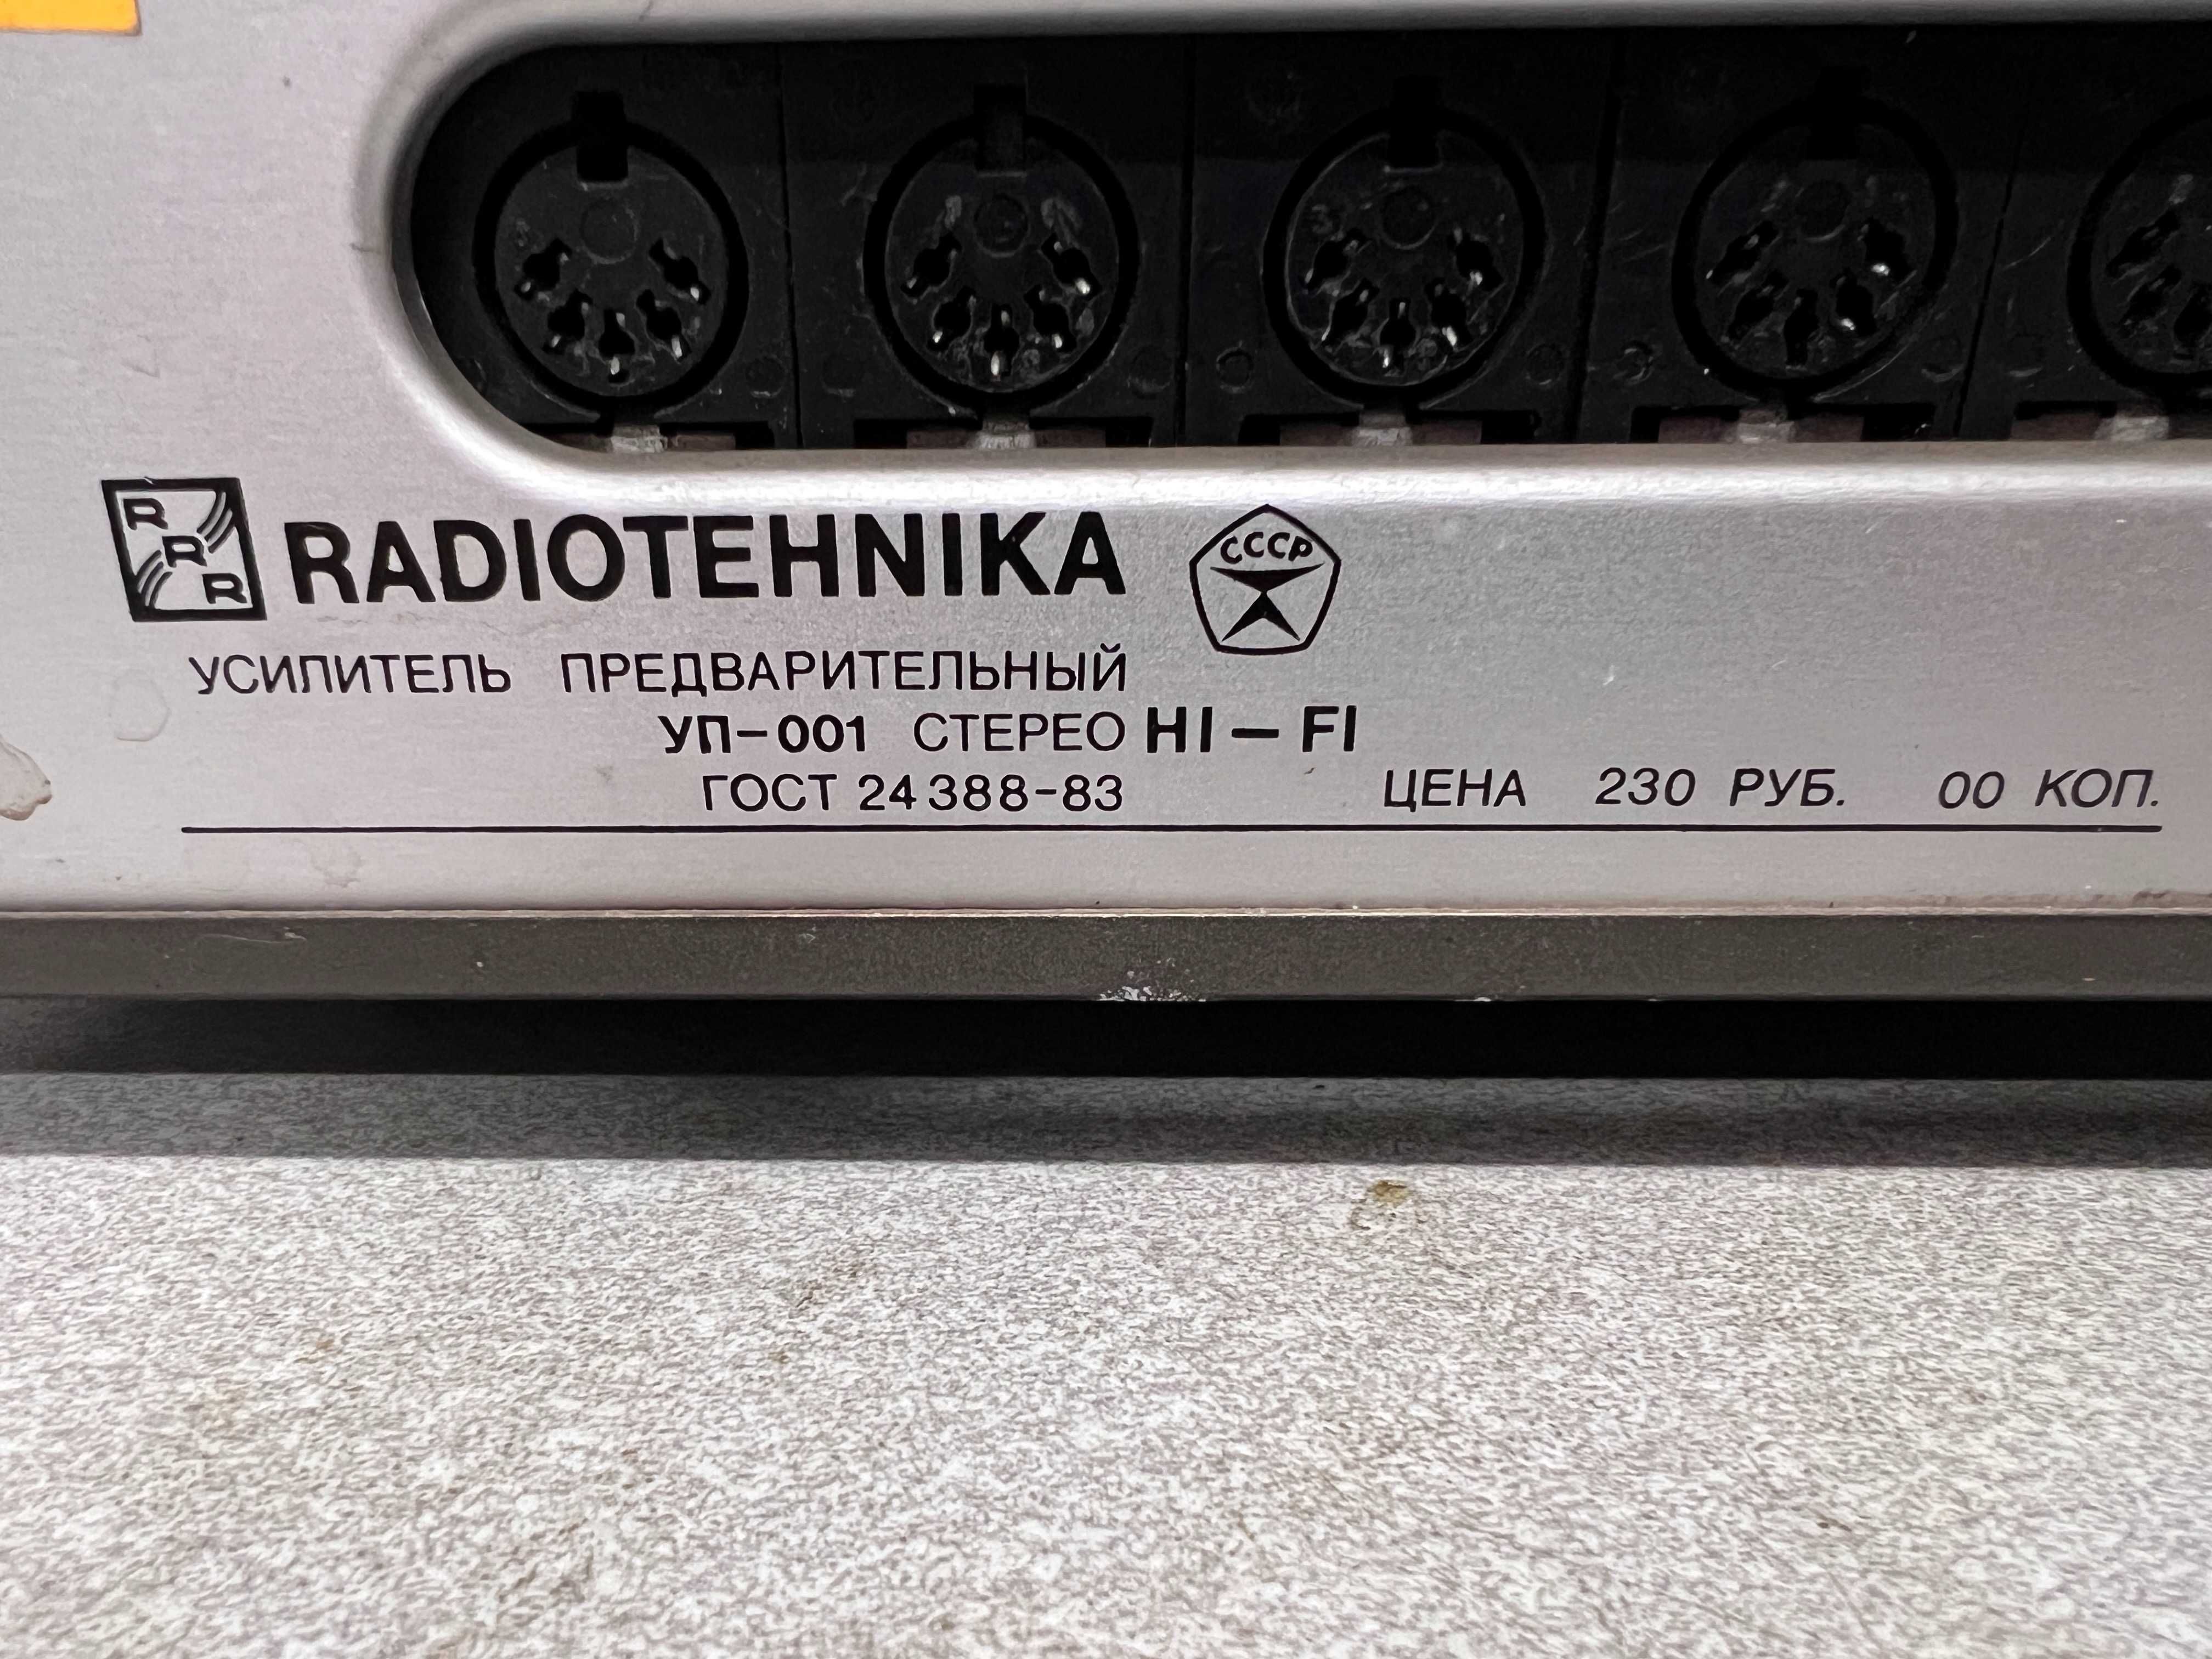 Radiotechnica  001 pre amp